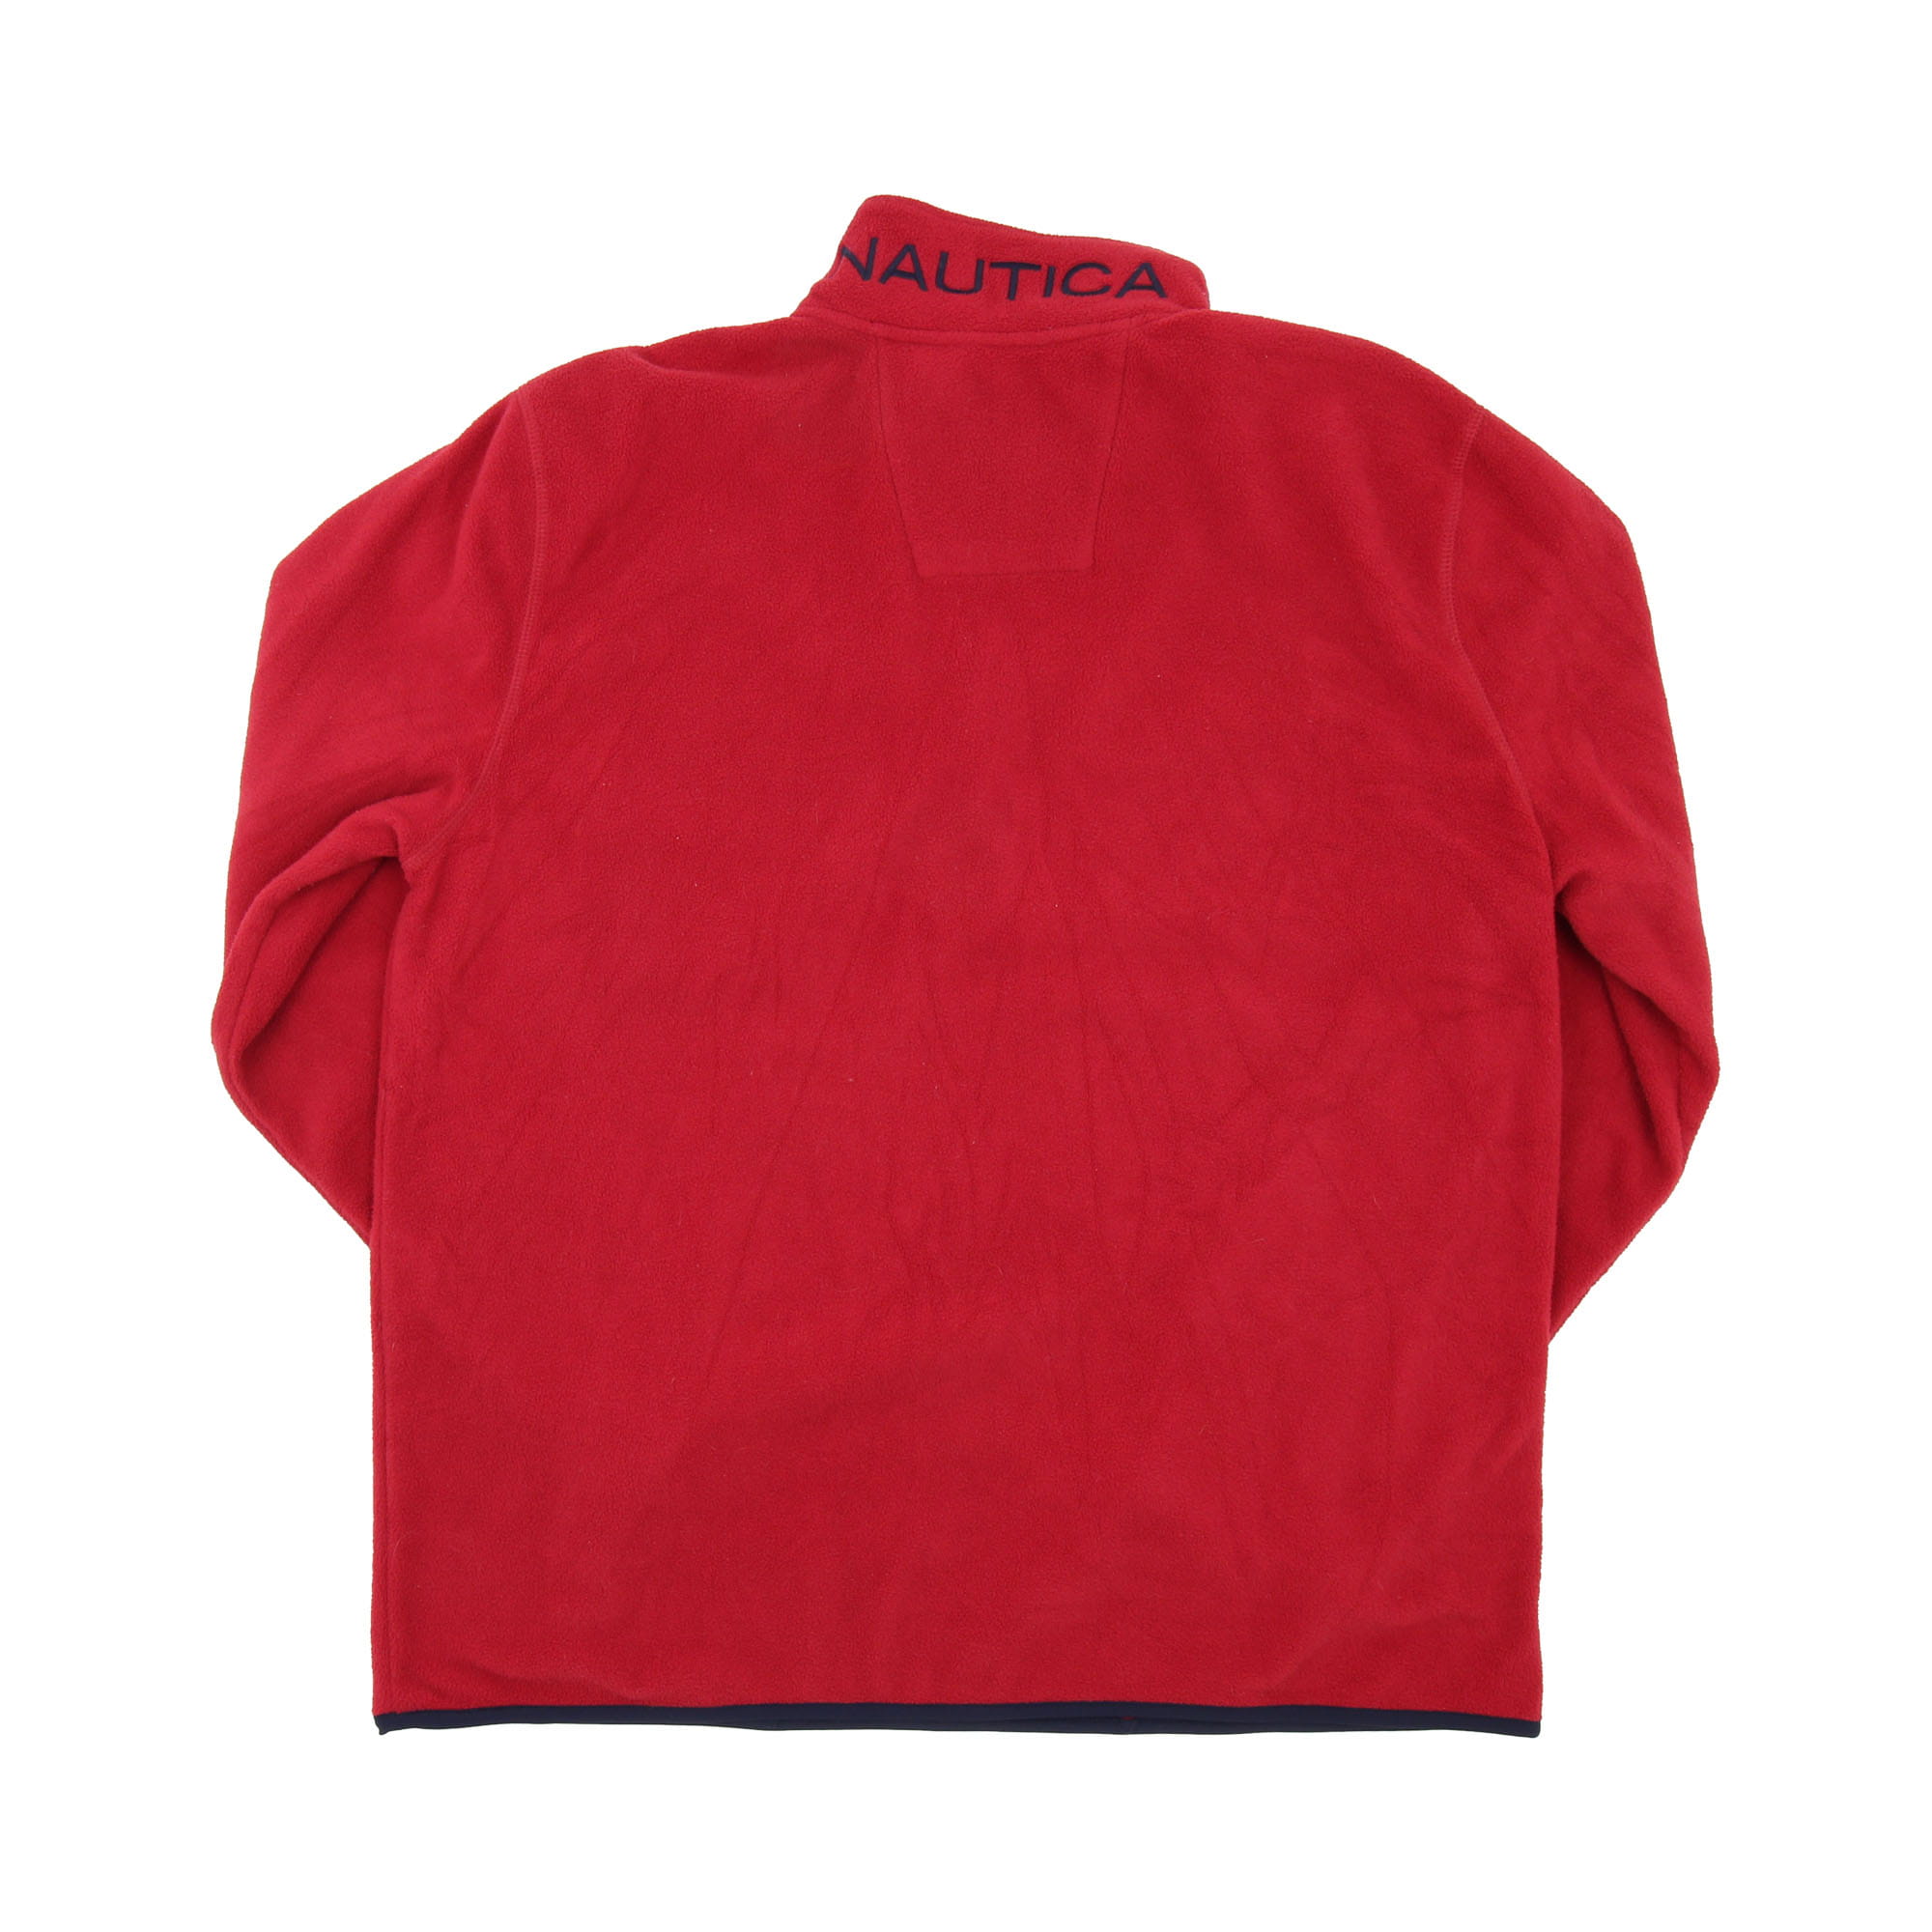 Nautica Fleece Red -  L/XL